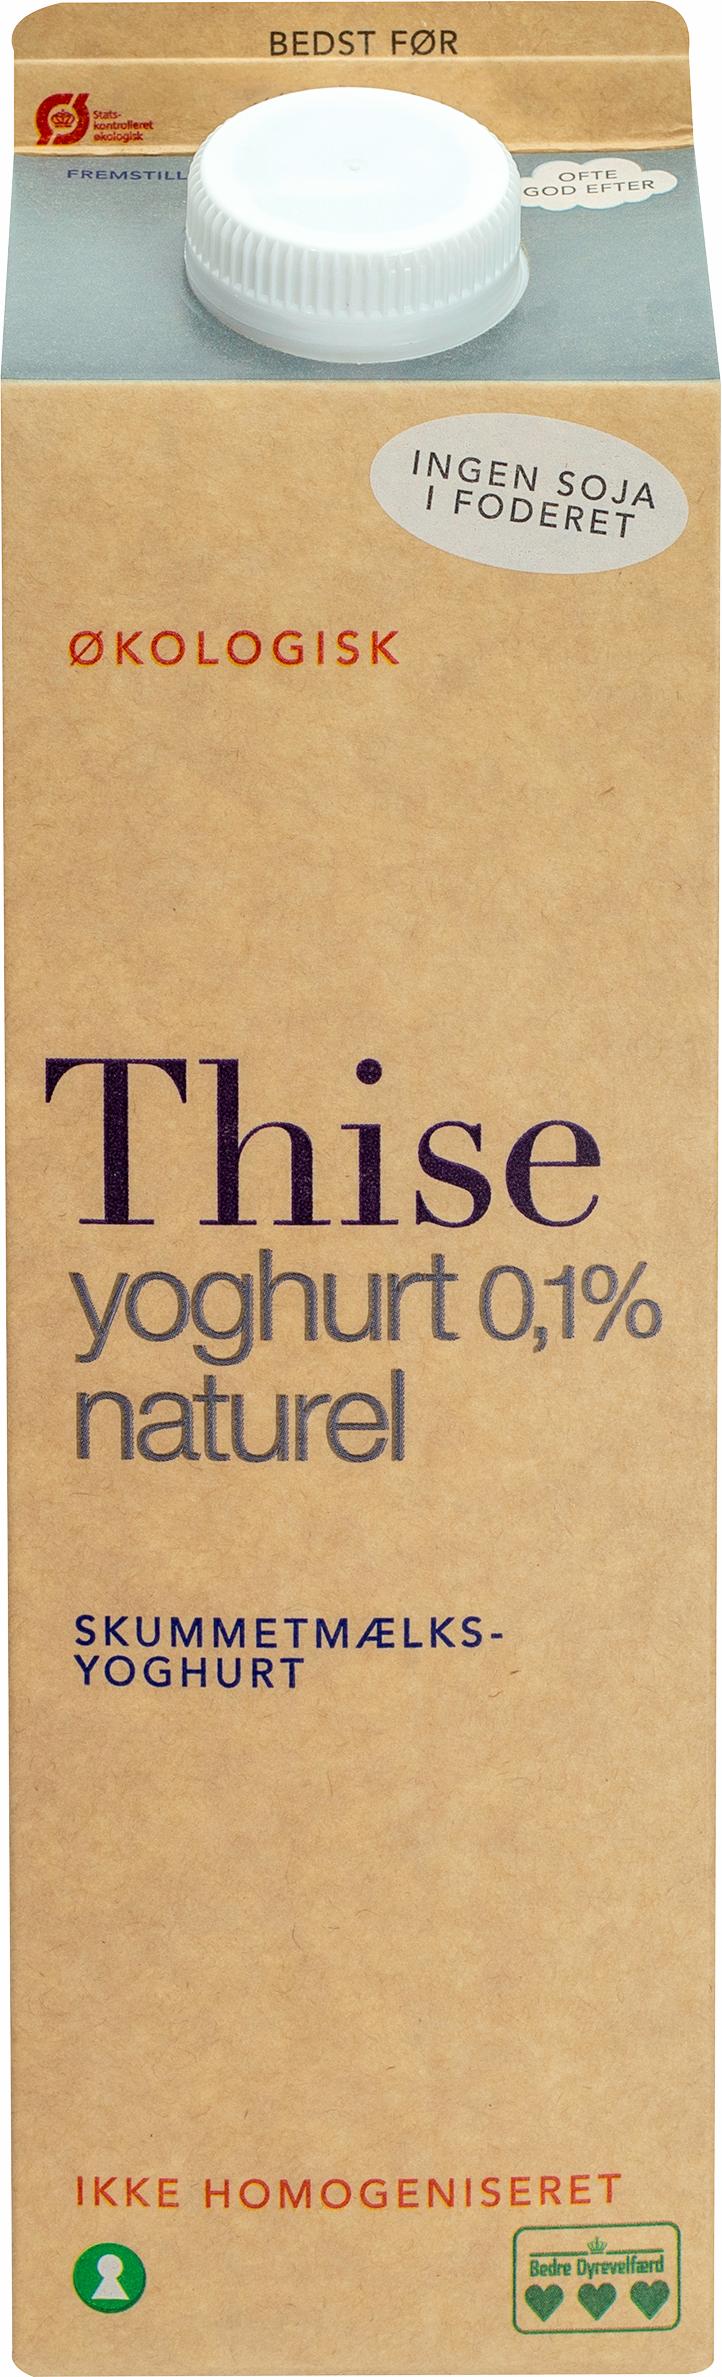 Thise Yoghurt Naturel 0,1% 1000g